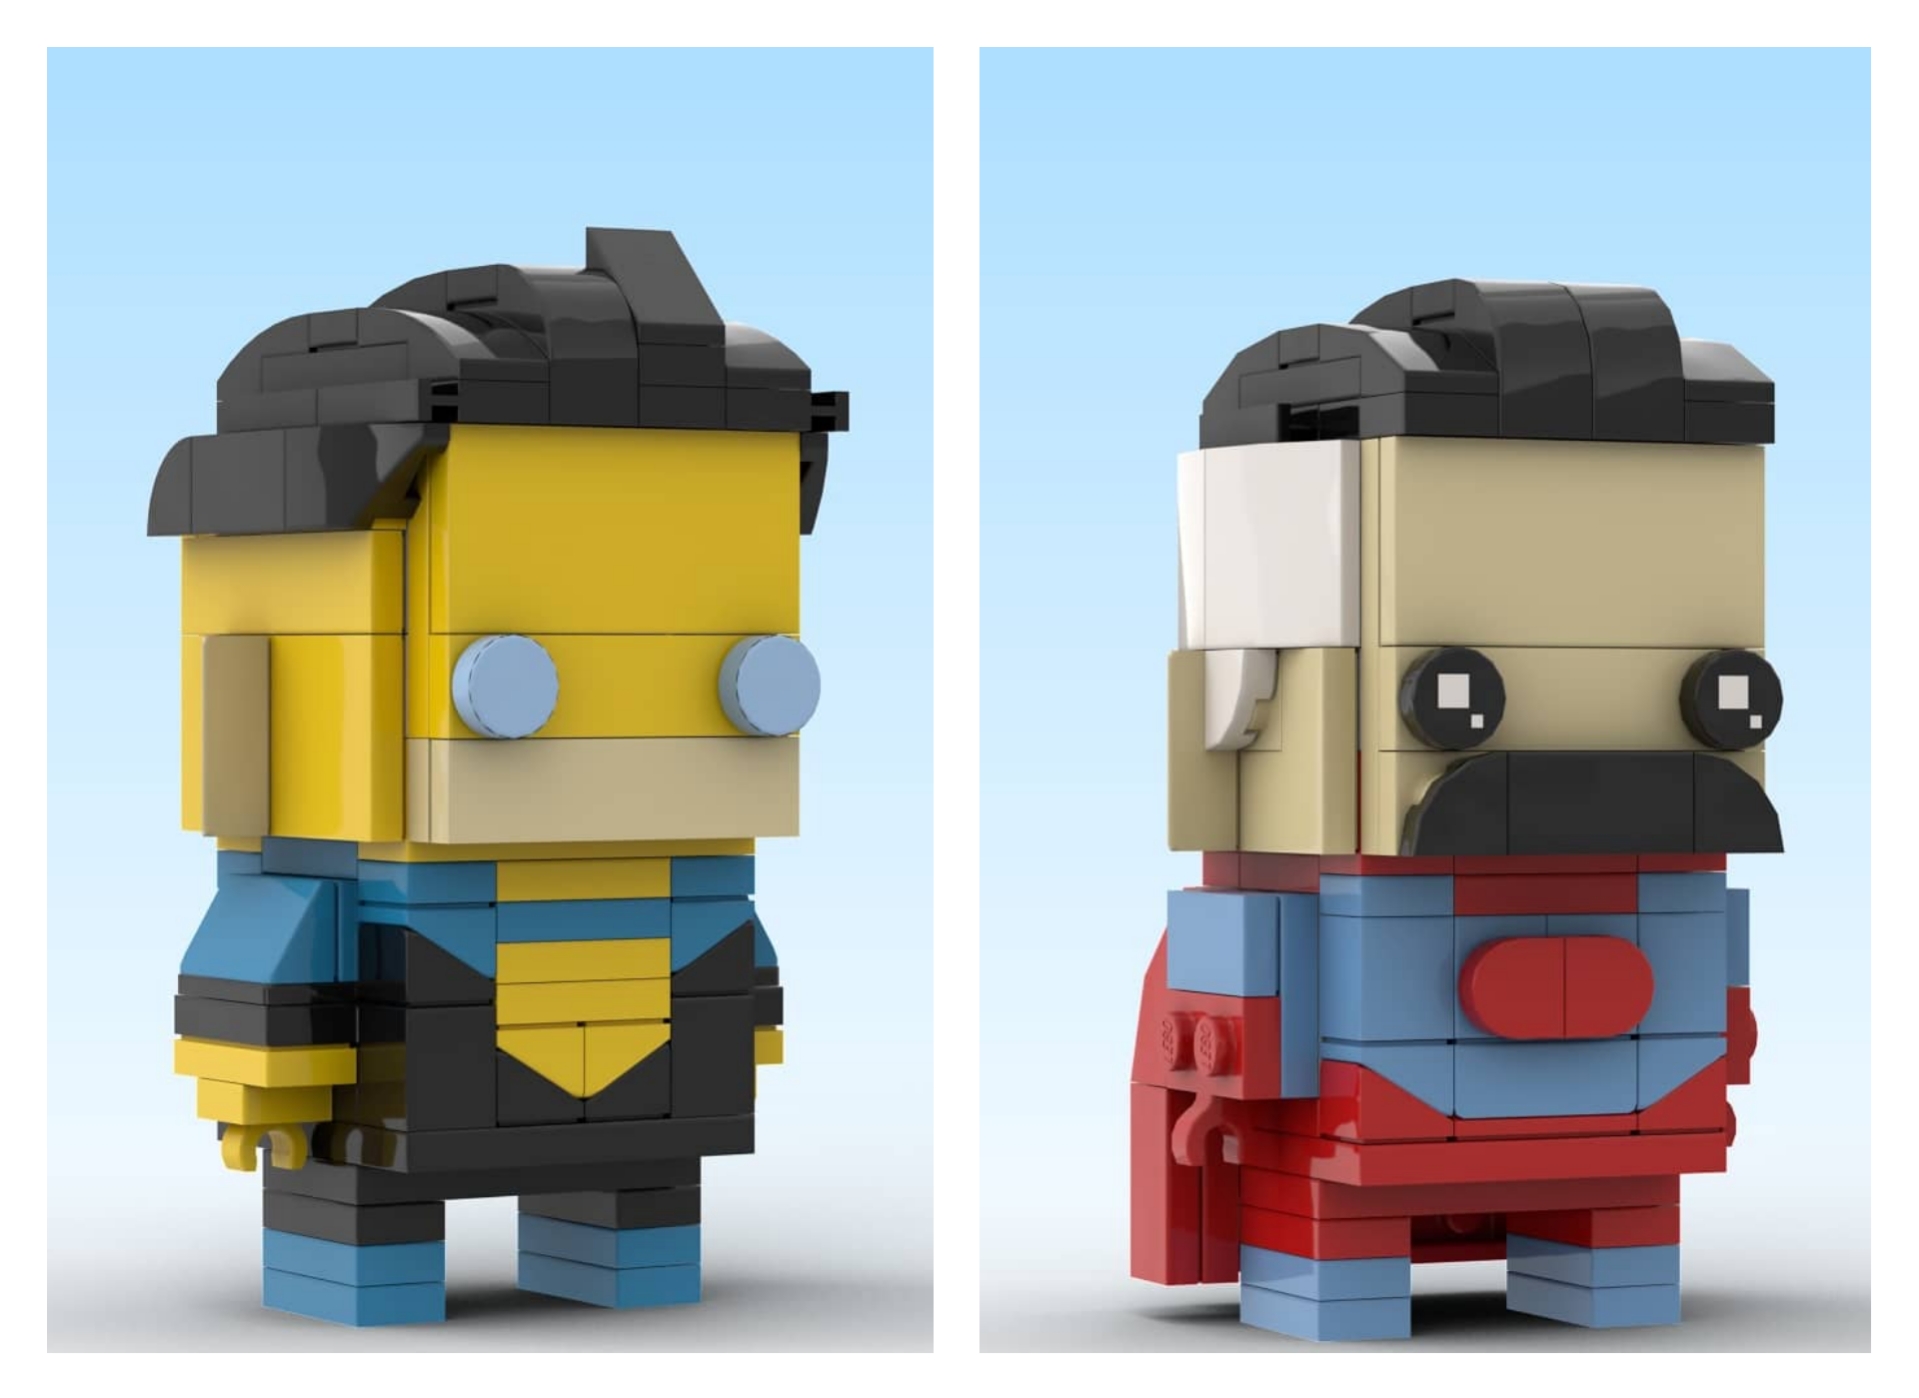 LEGO MOC Encanto Brickheadz Complete Collection by DrBrickheadz